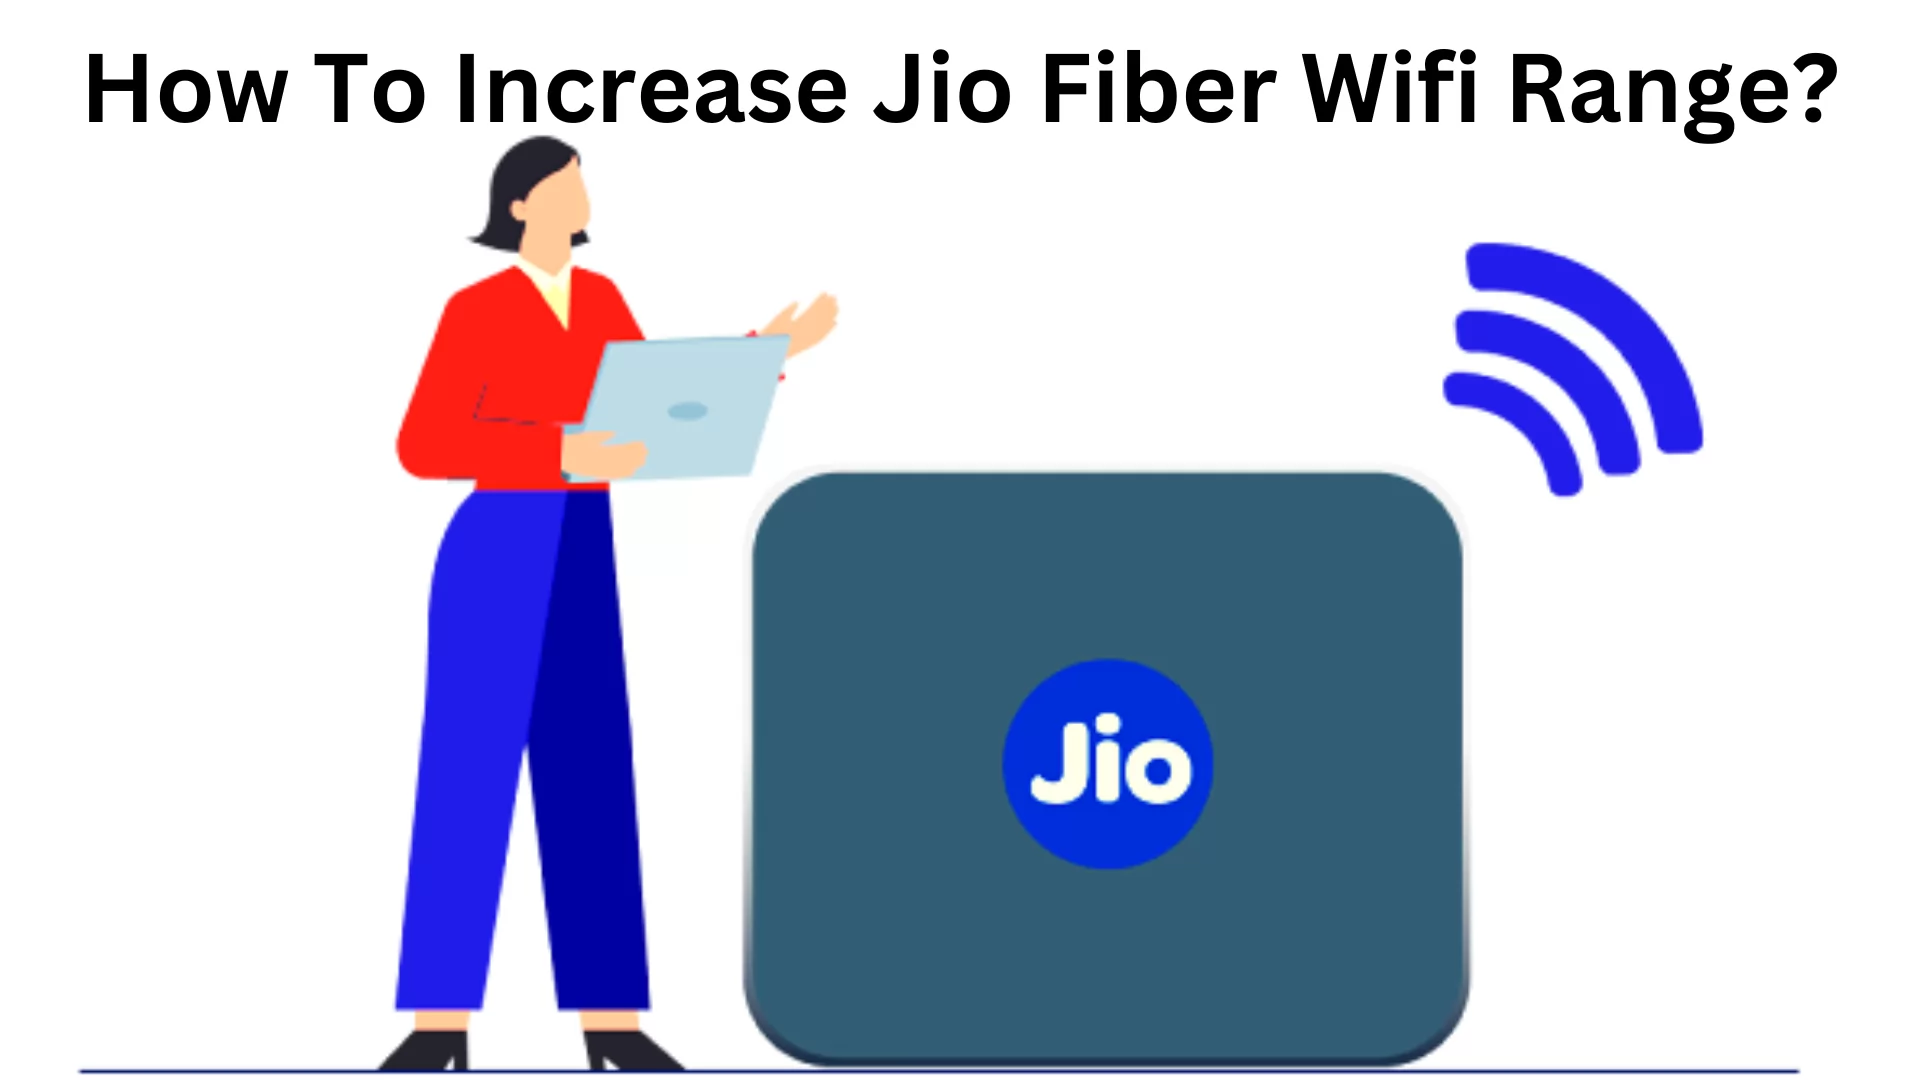 How To Increase Jio Fiber Wi-Fi Range?